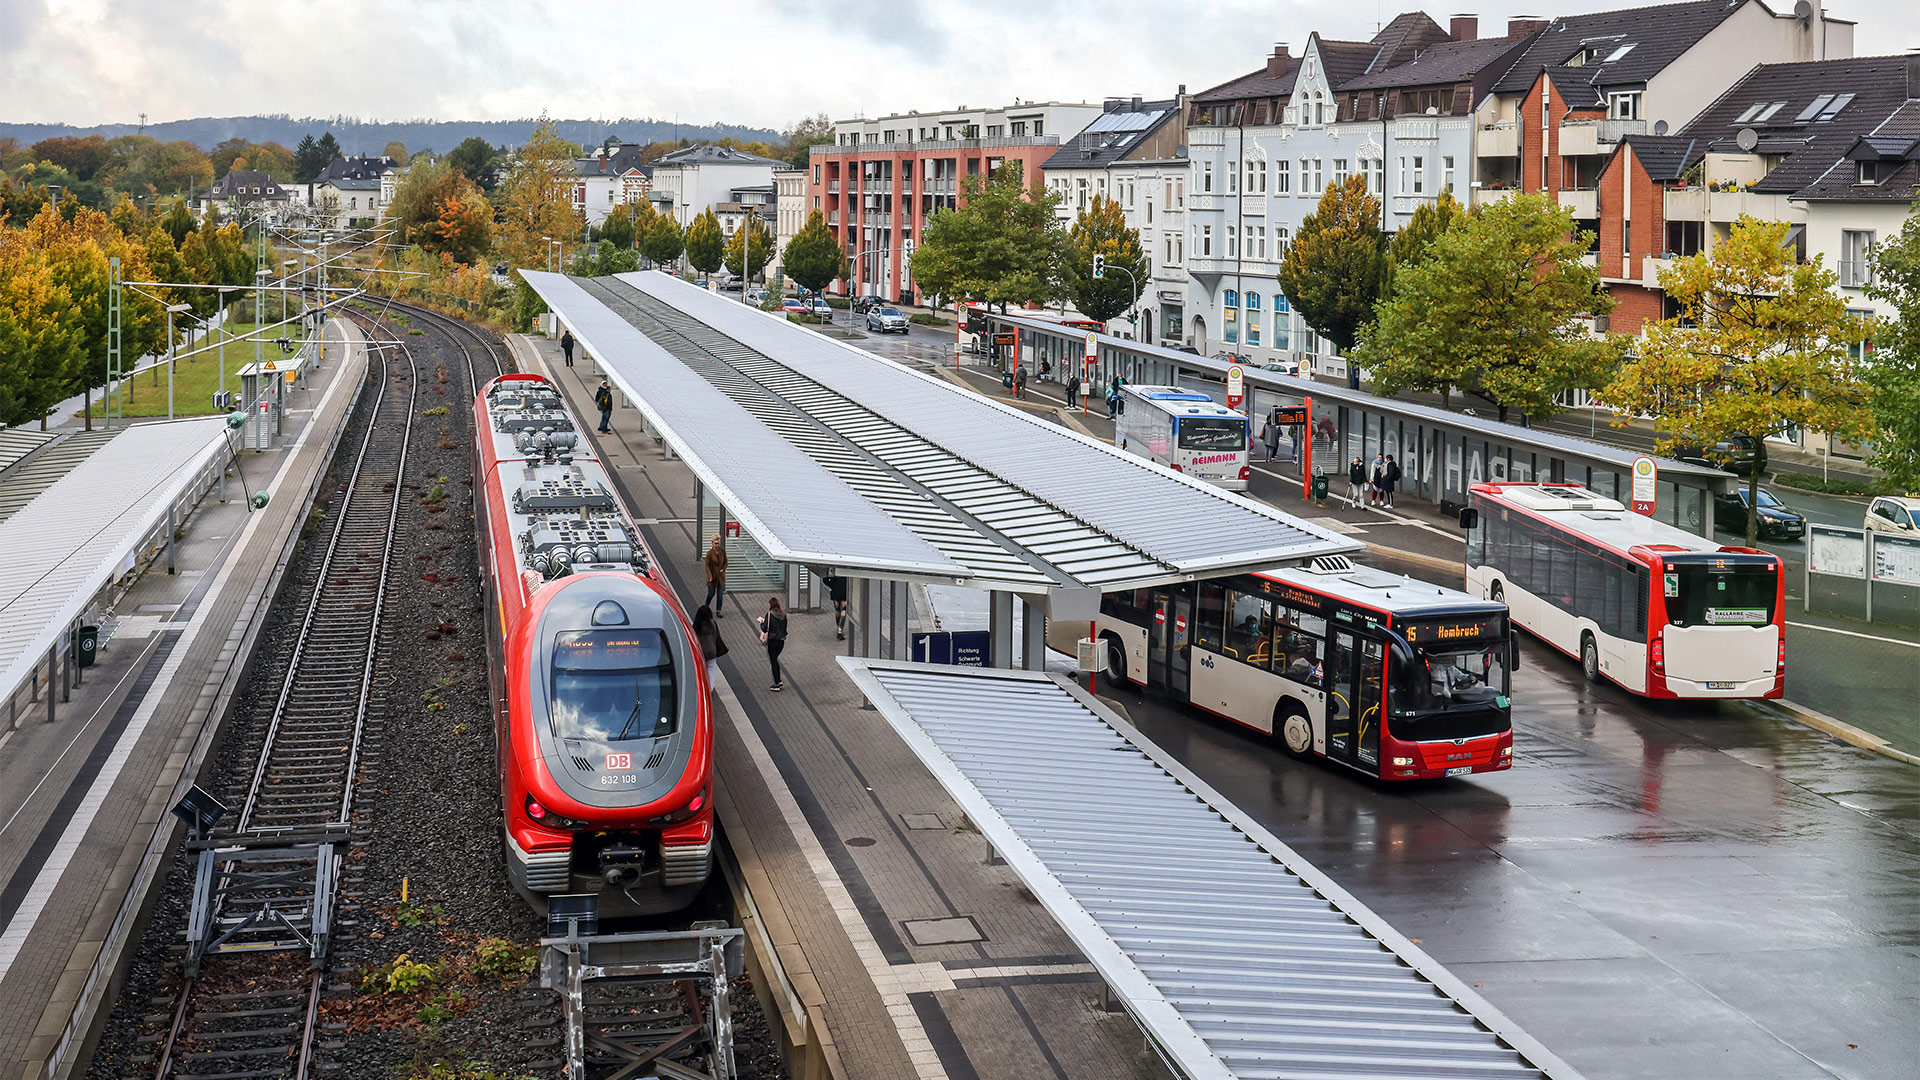 Zug und Busse am Bahnhof Iserlohn | picture alliance / Rupert Oberh